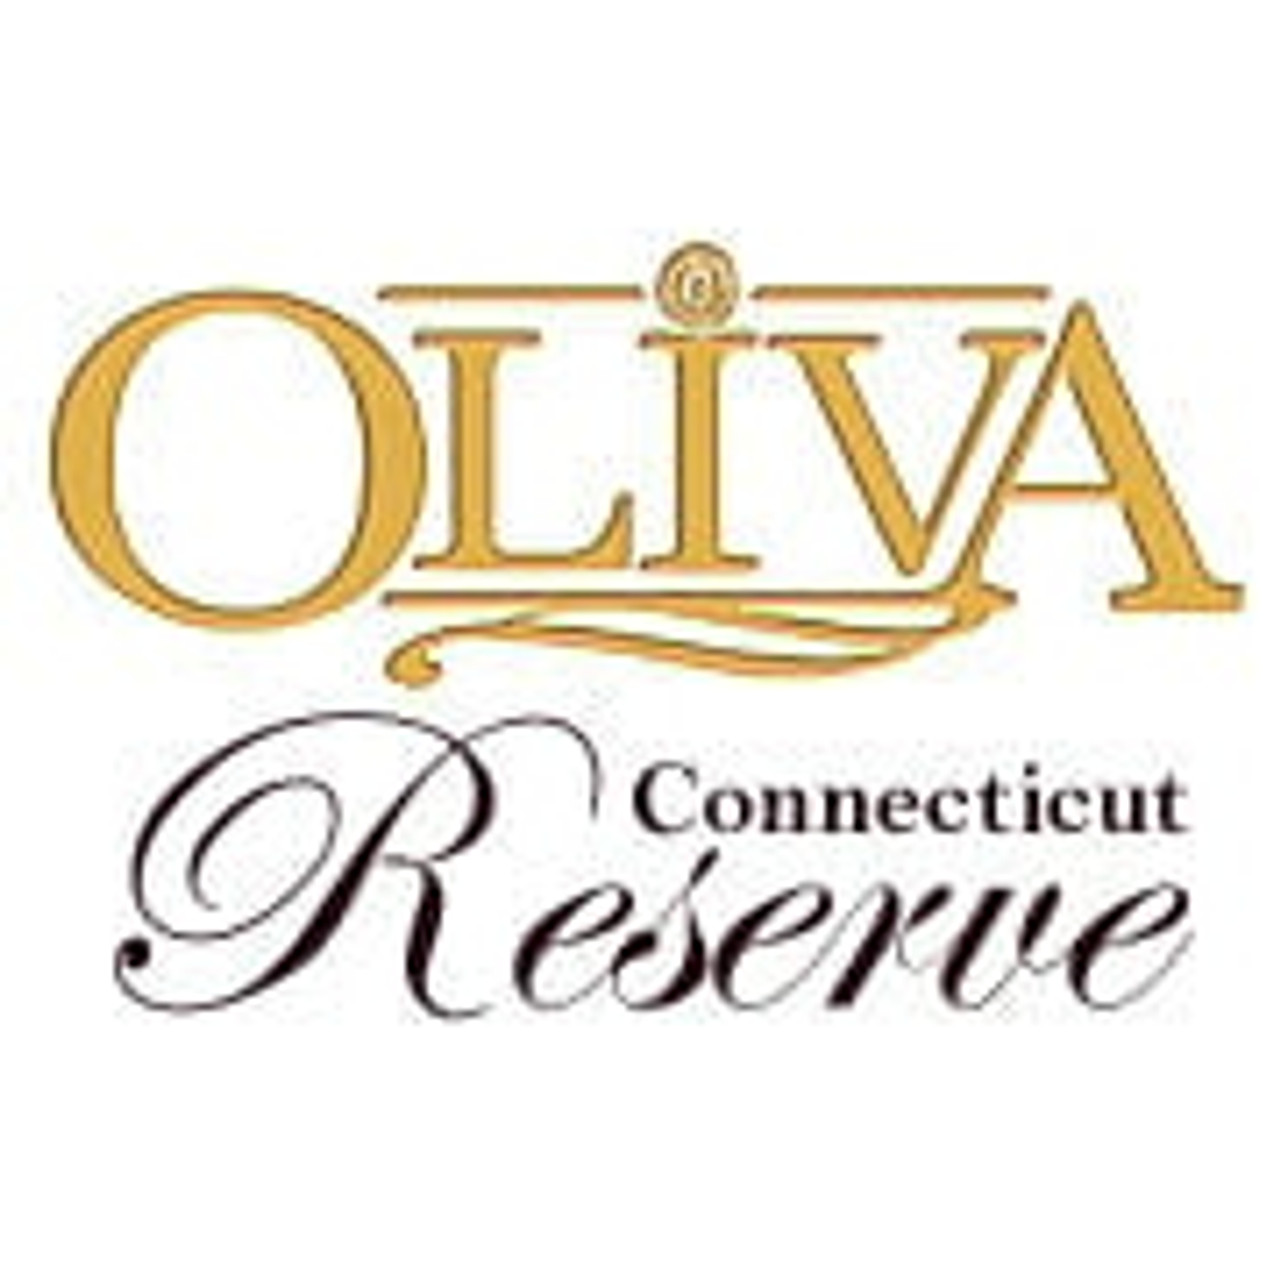 Oliva Connecticut Reserve Logo